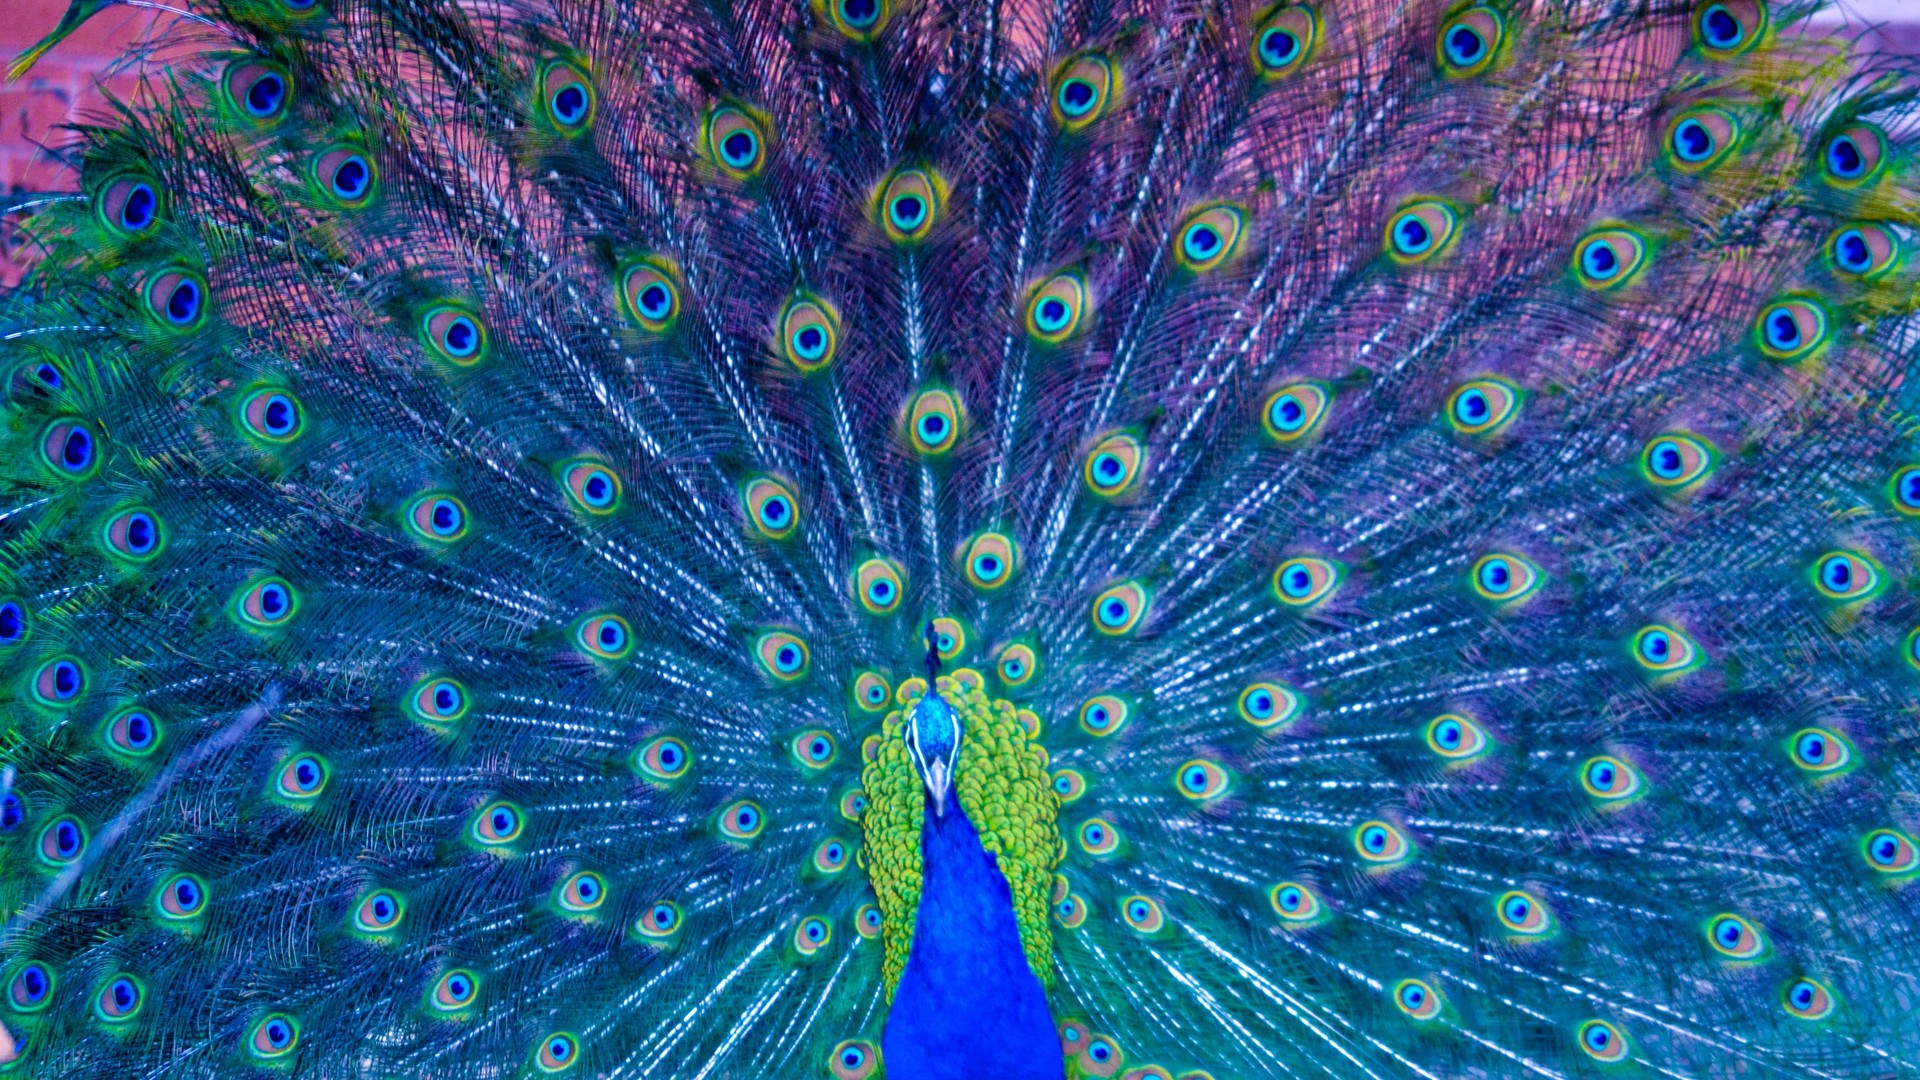 HD Peacock Animal Wallpaper 1920x1080